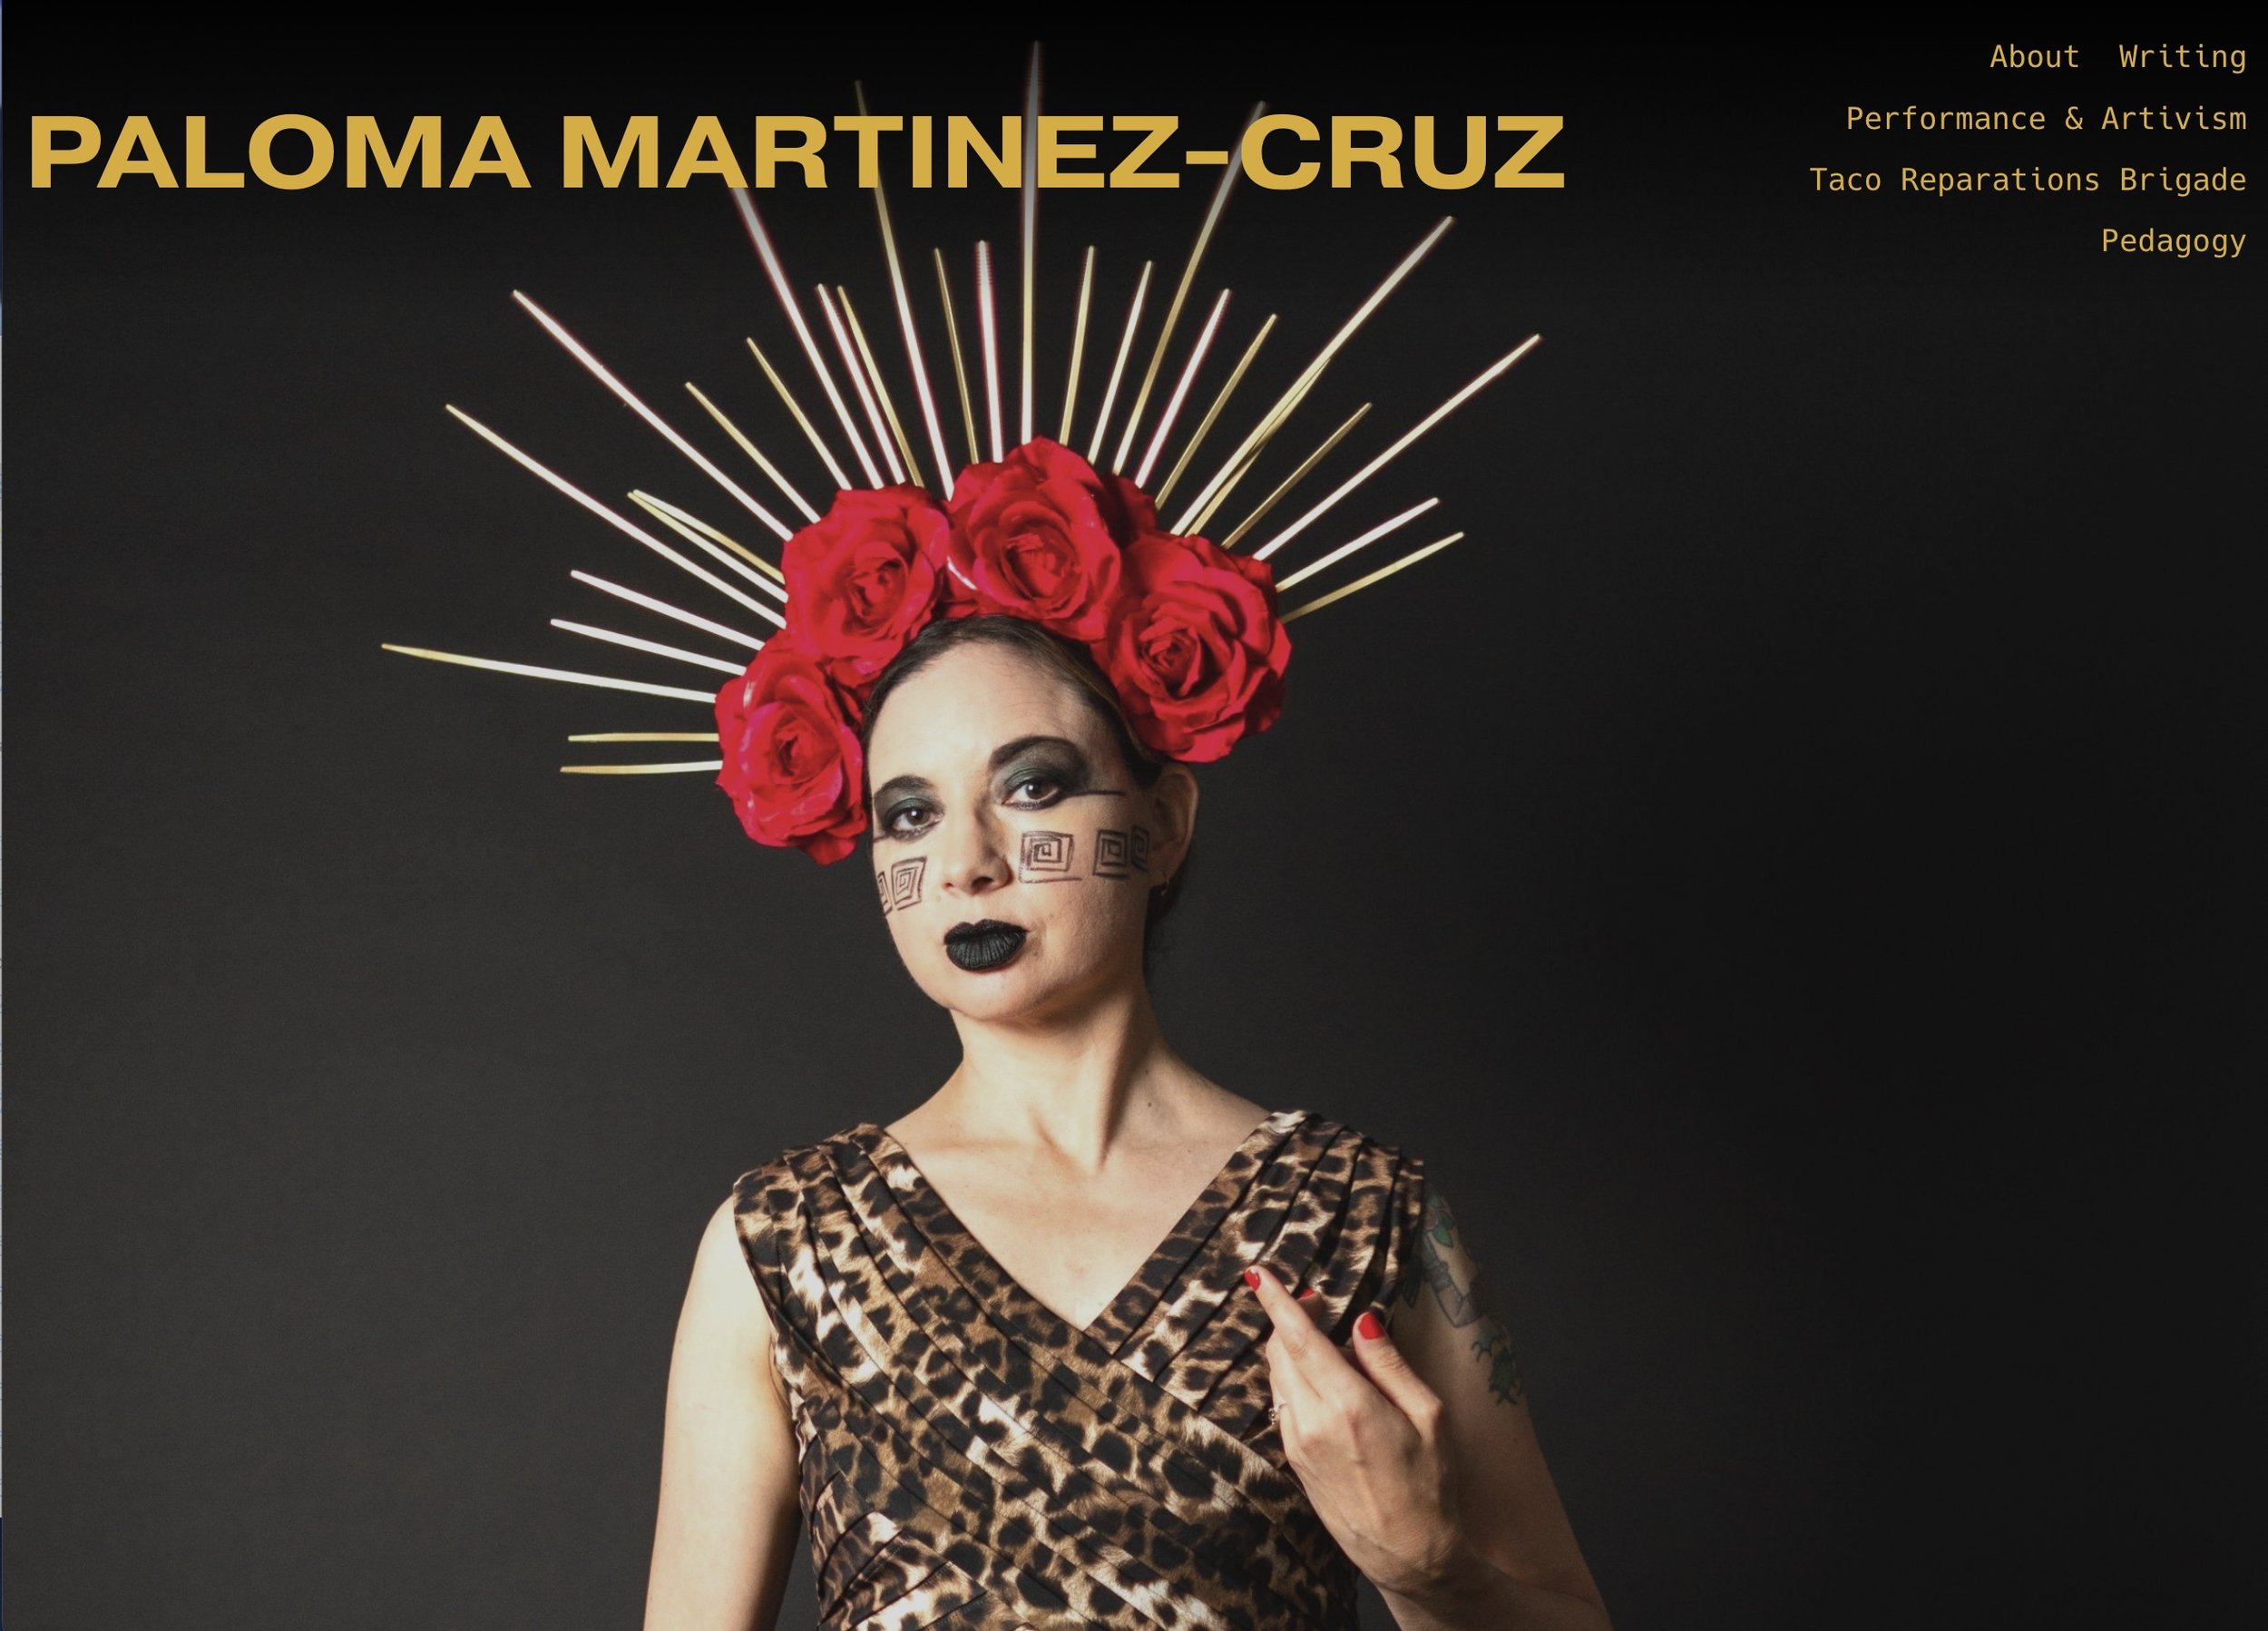 Paloma Martinez-Cruz